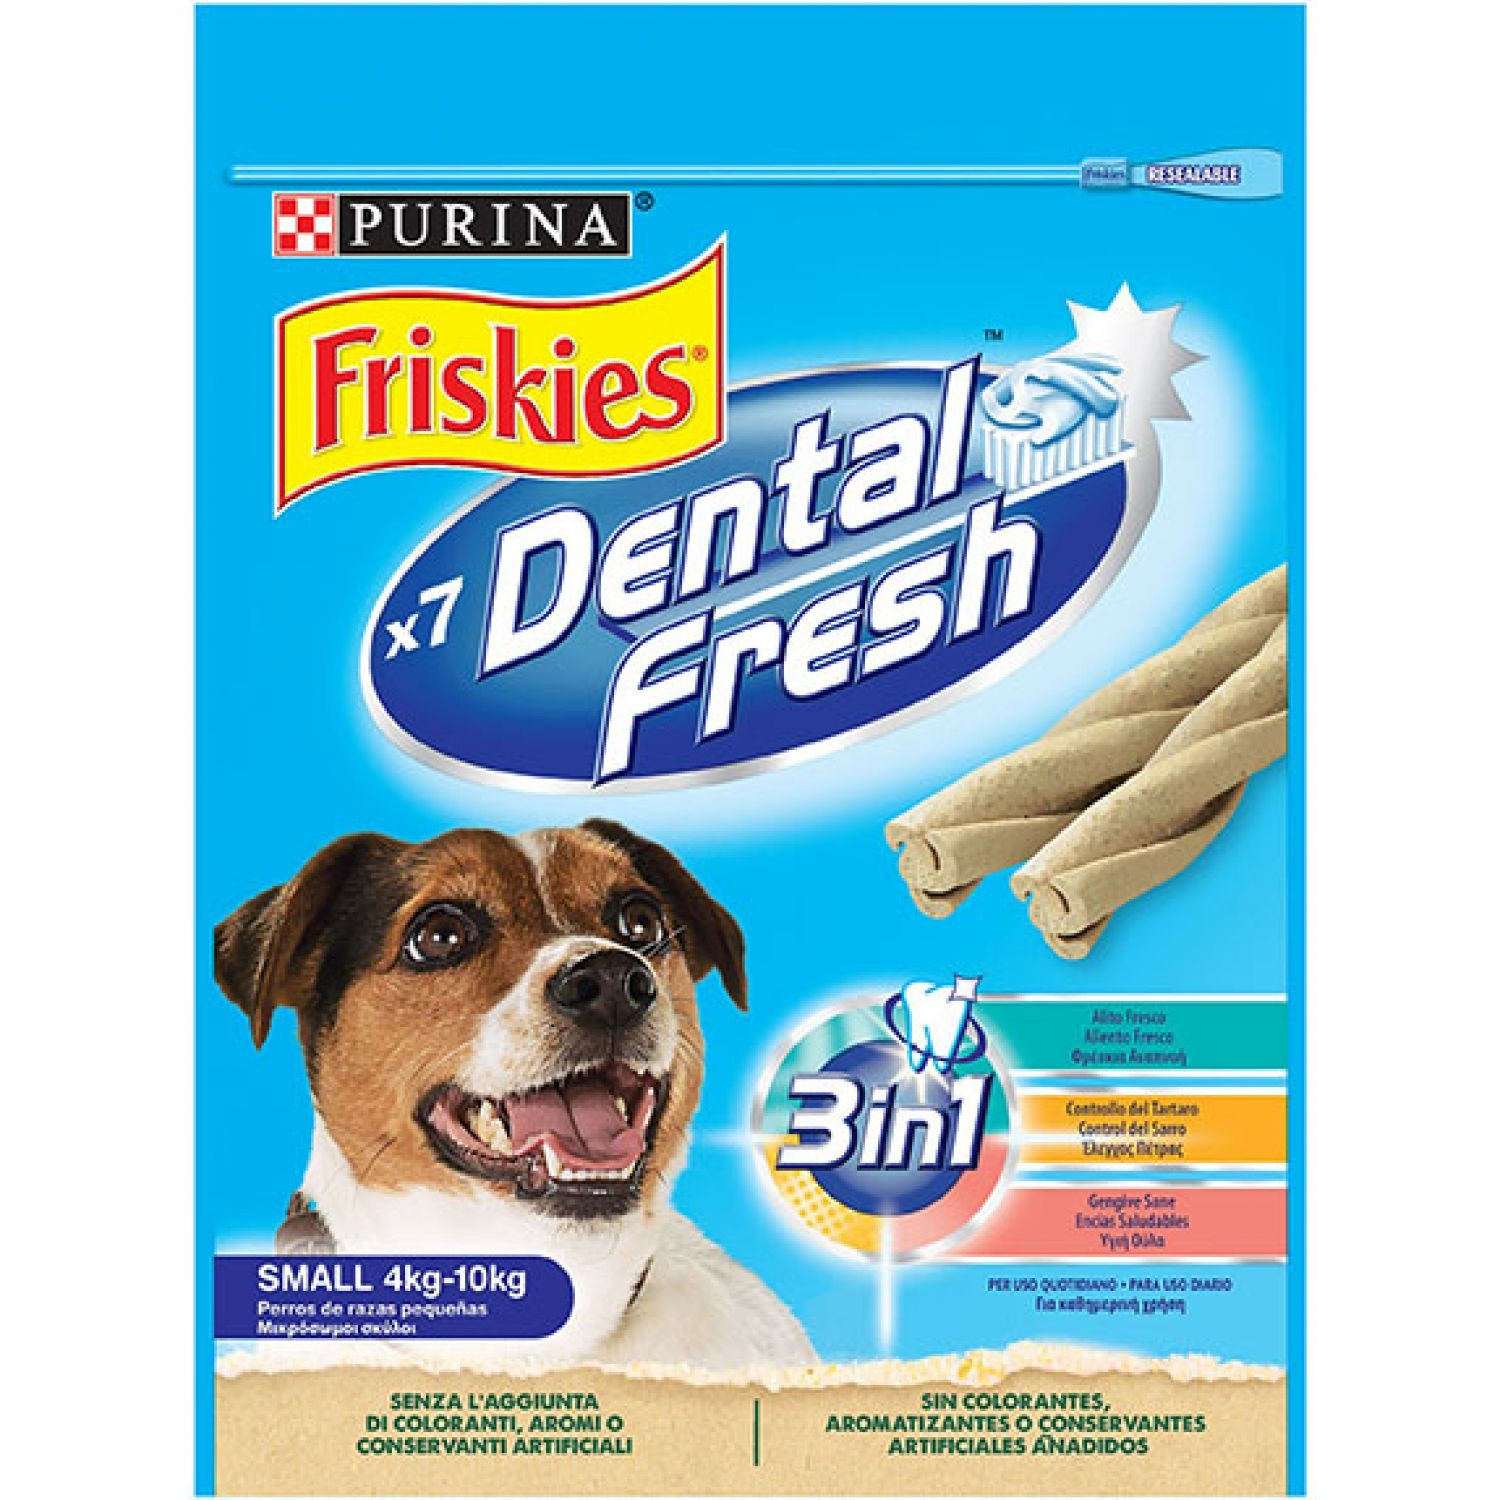 Friskies Dental Fresh snacks de menta para perros